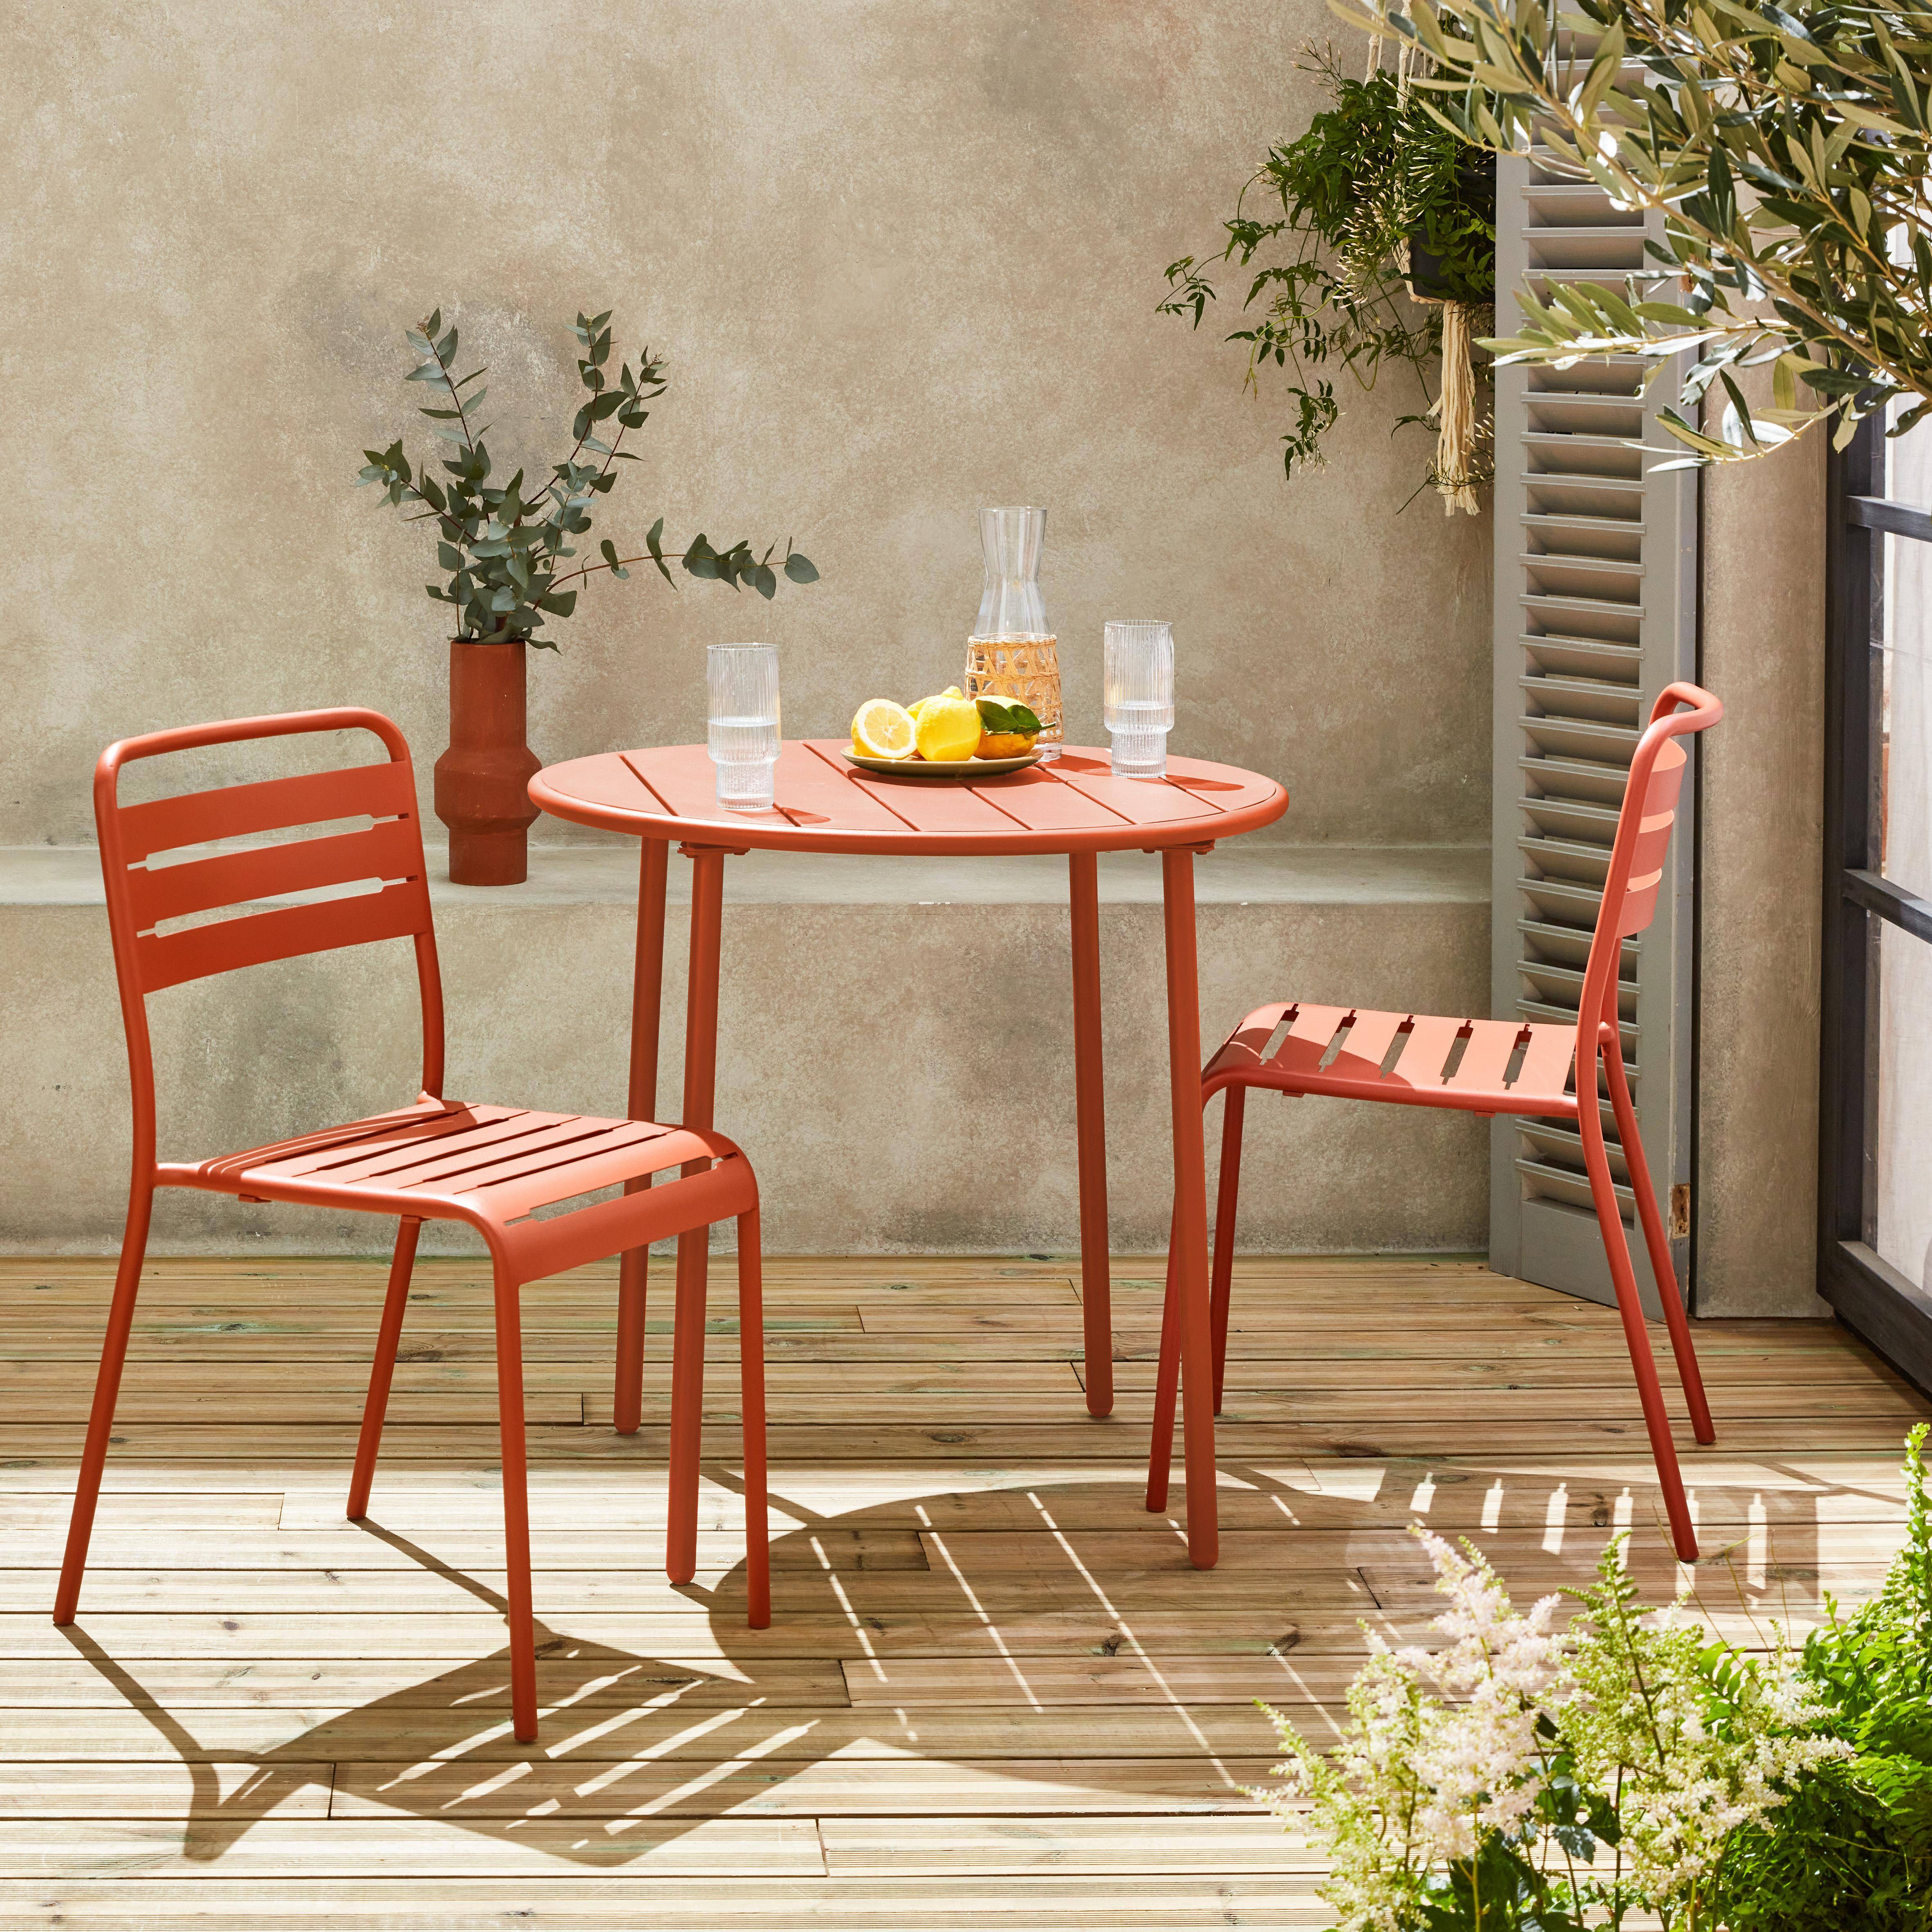 Amélia terracotta metalen tuintafel met 2 stoelen, roestbestendige afwerking,sweeek,Photo1